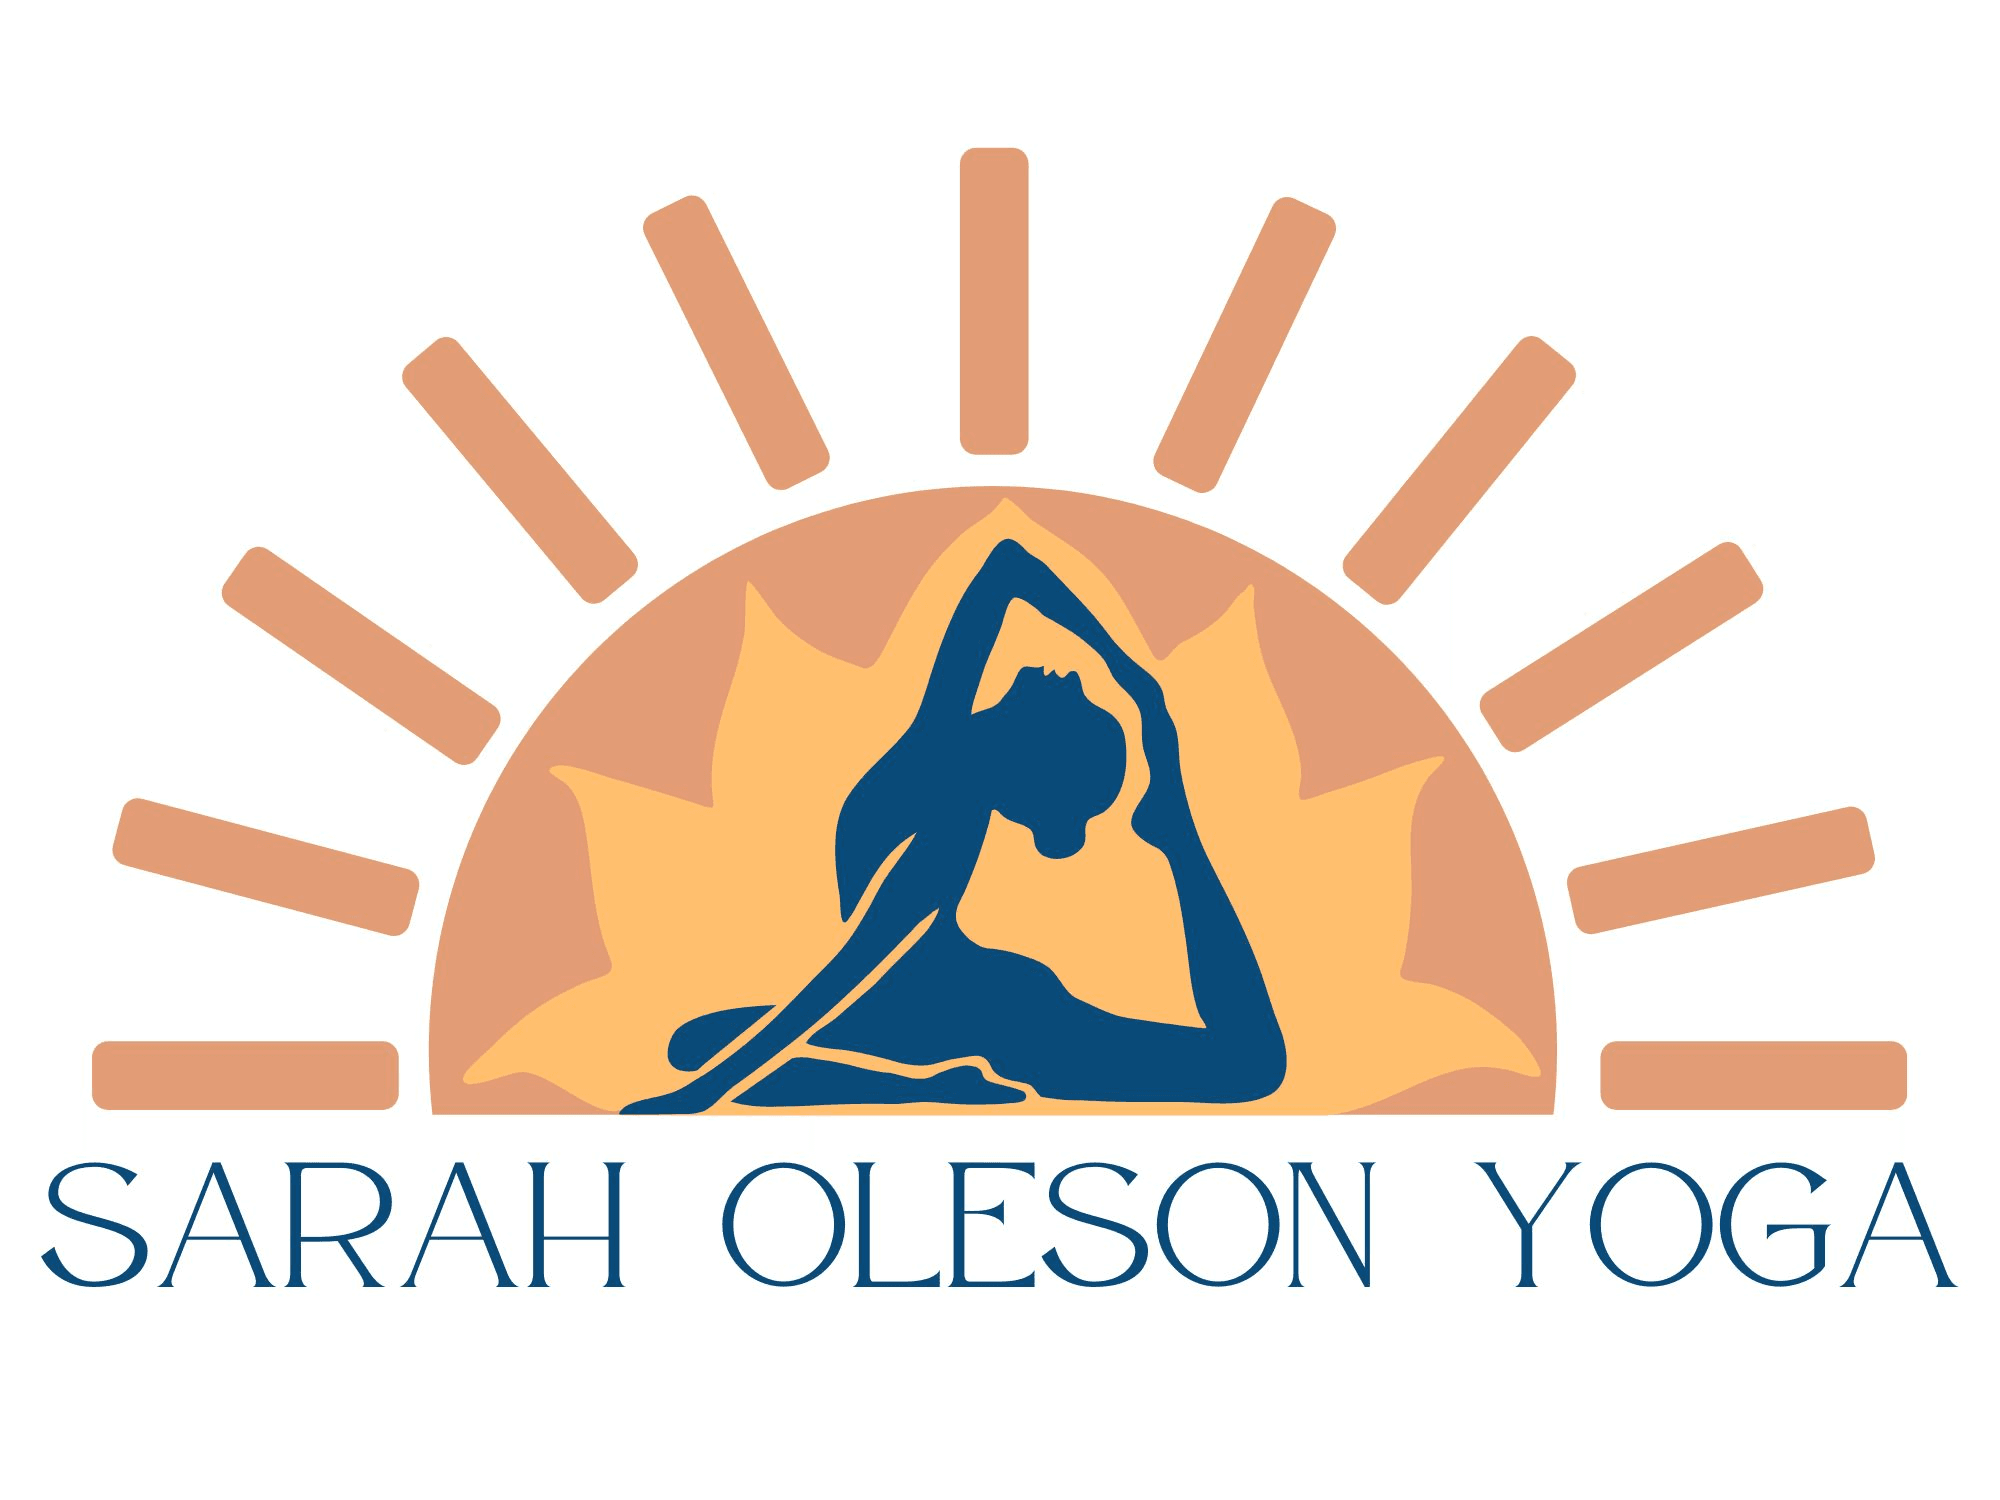 Sarah Oleson Yoga